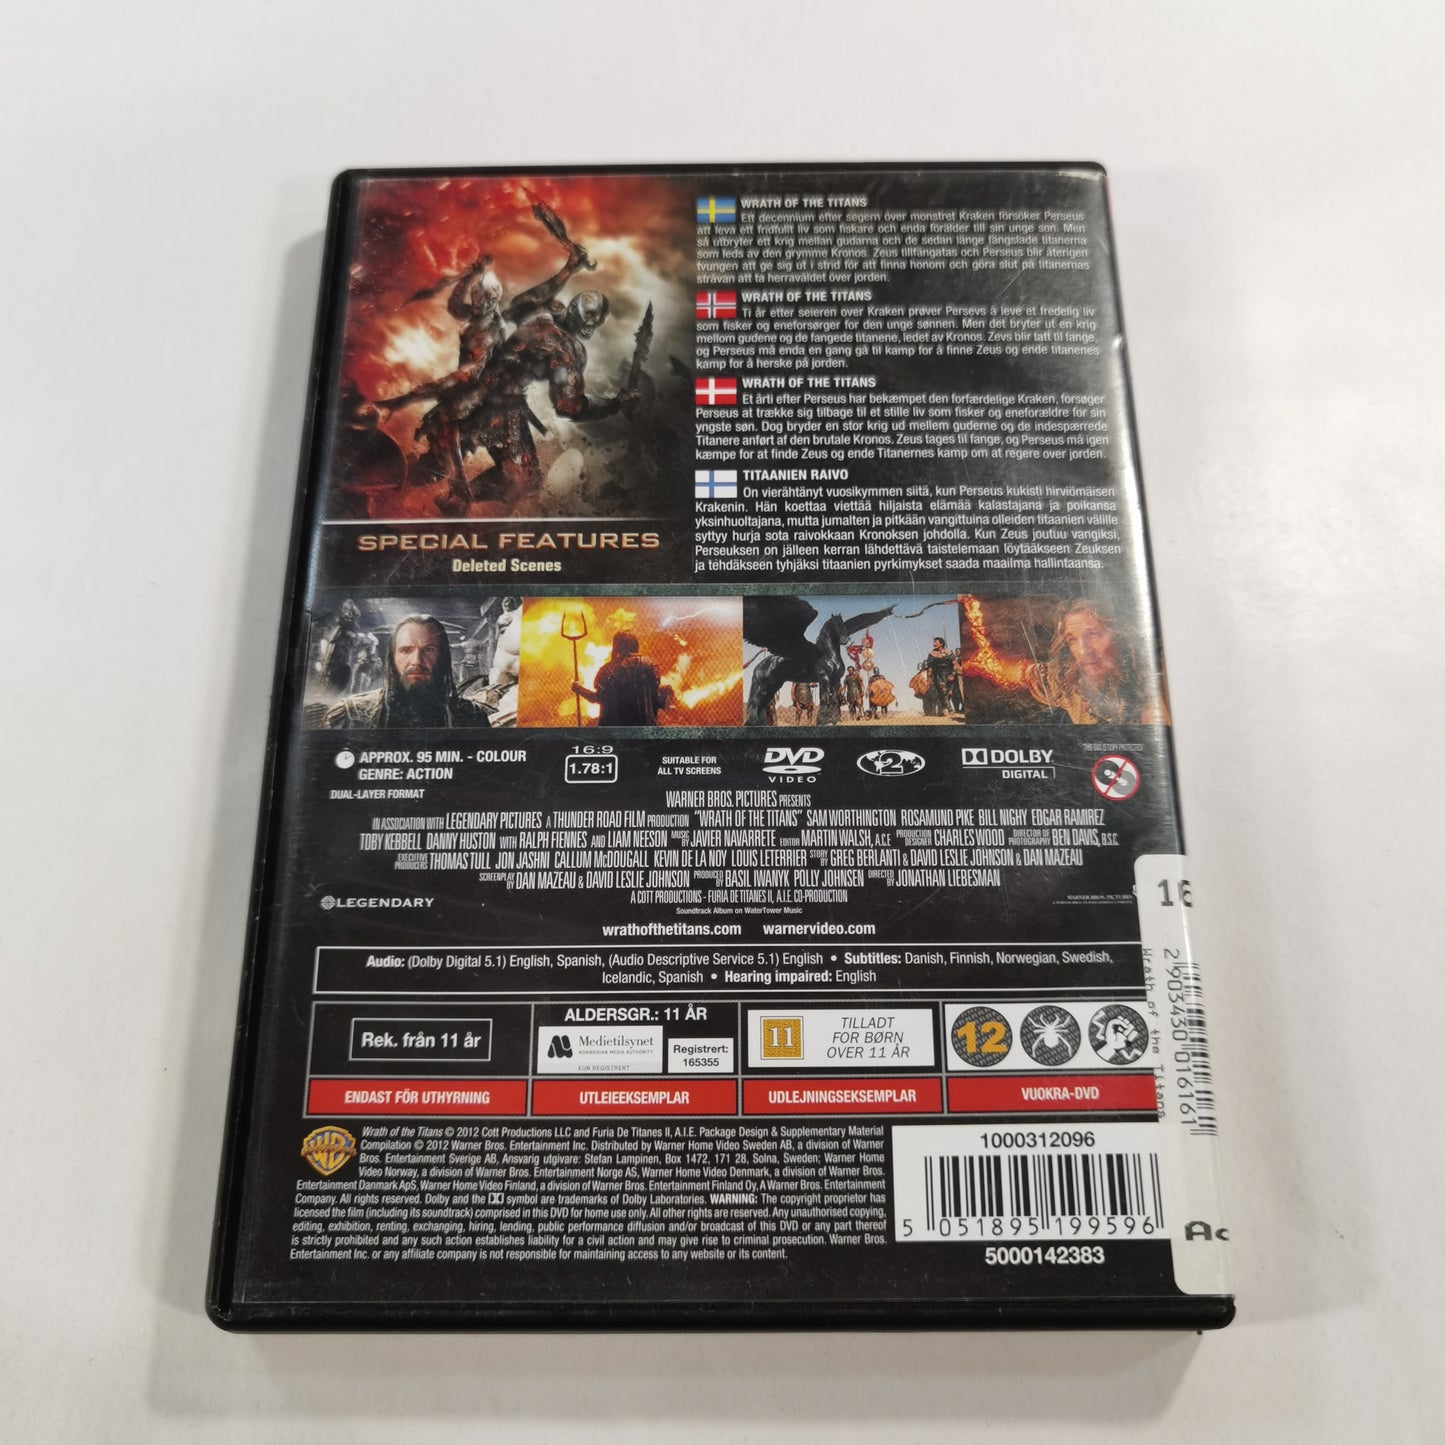 Clash of the Titans: The Sequel: Wrath of the Titans (2012) - DVD SE NO DK FI 2012 RC